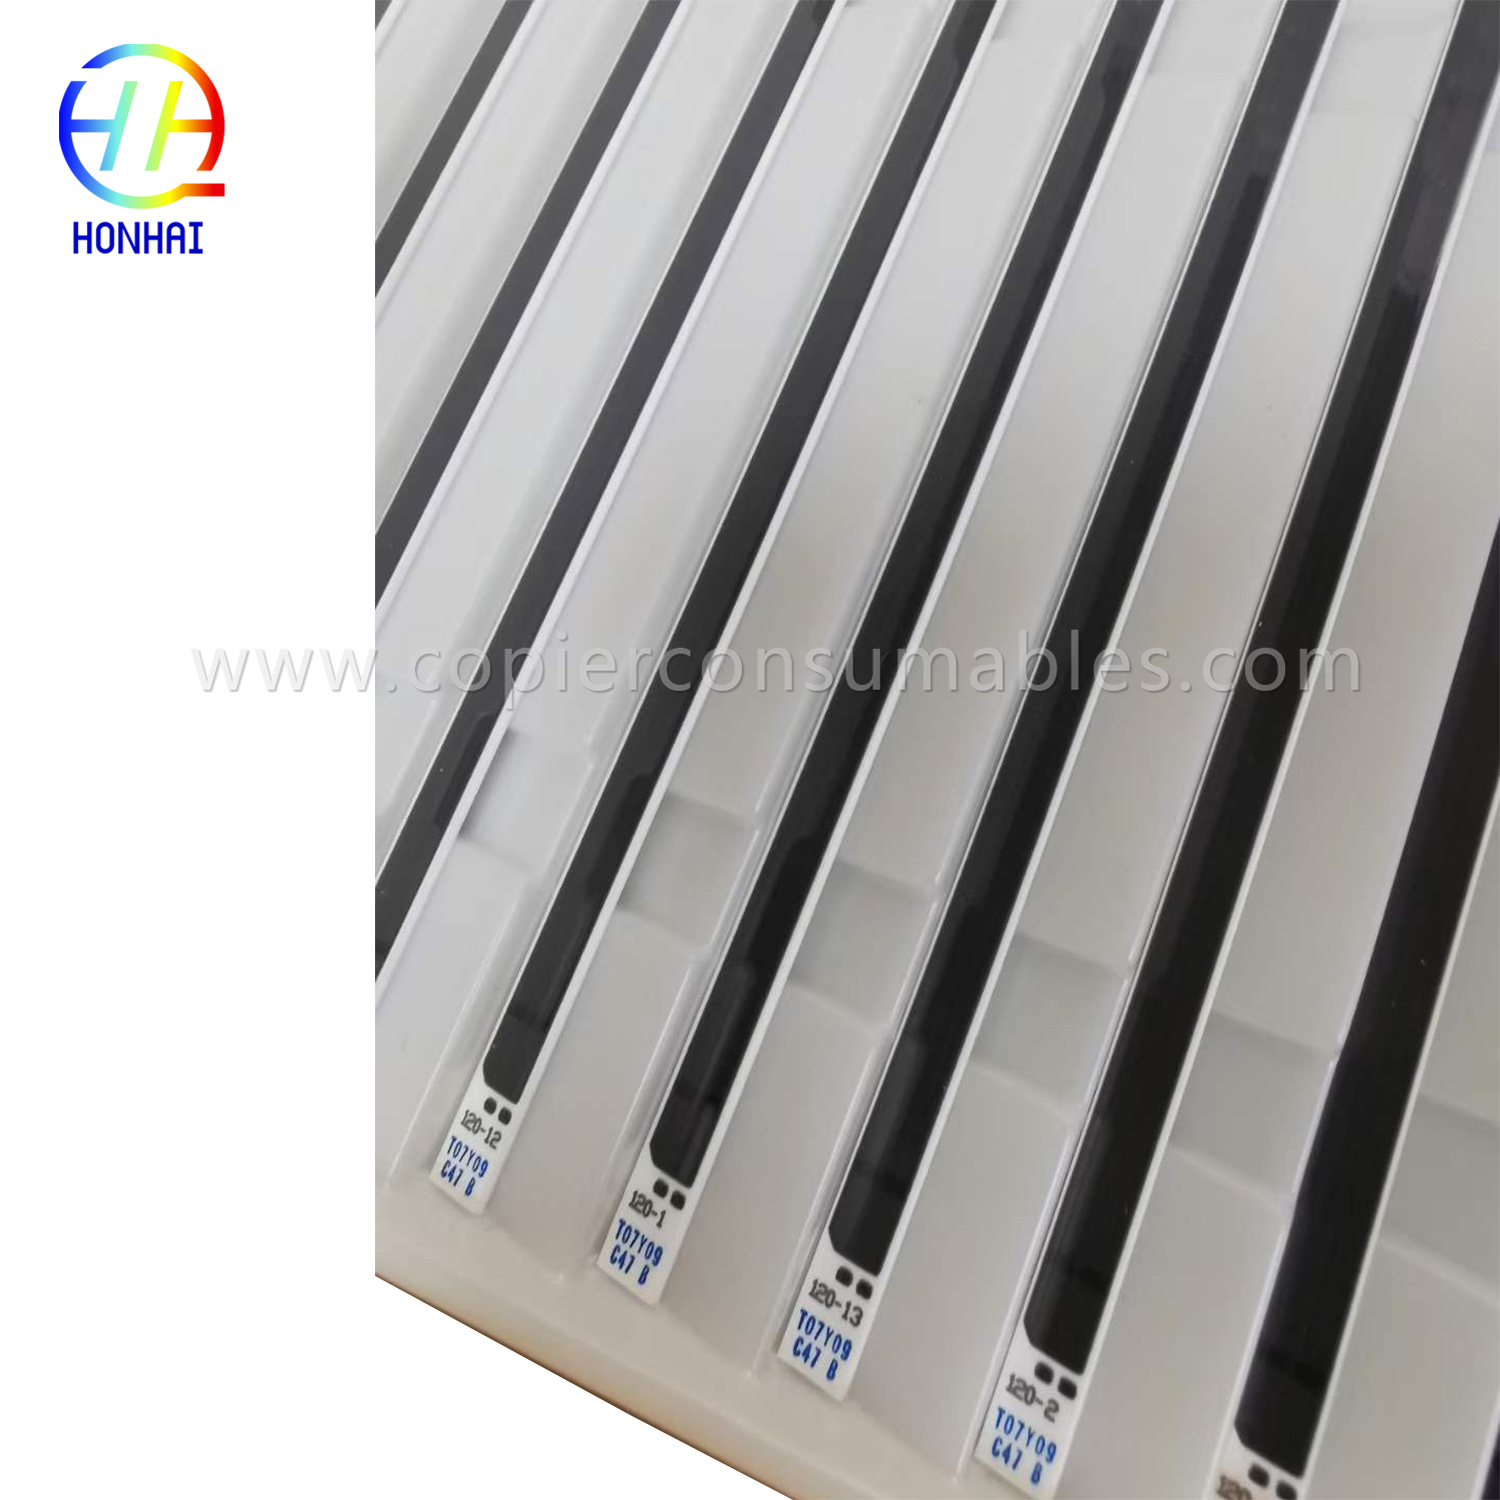 I-Ceramic Heating Element ye-HP LaserJet 1010 1012 1015 1018 1020 3015 3020 3030 (RM1-0655-HE) 拷贝